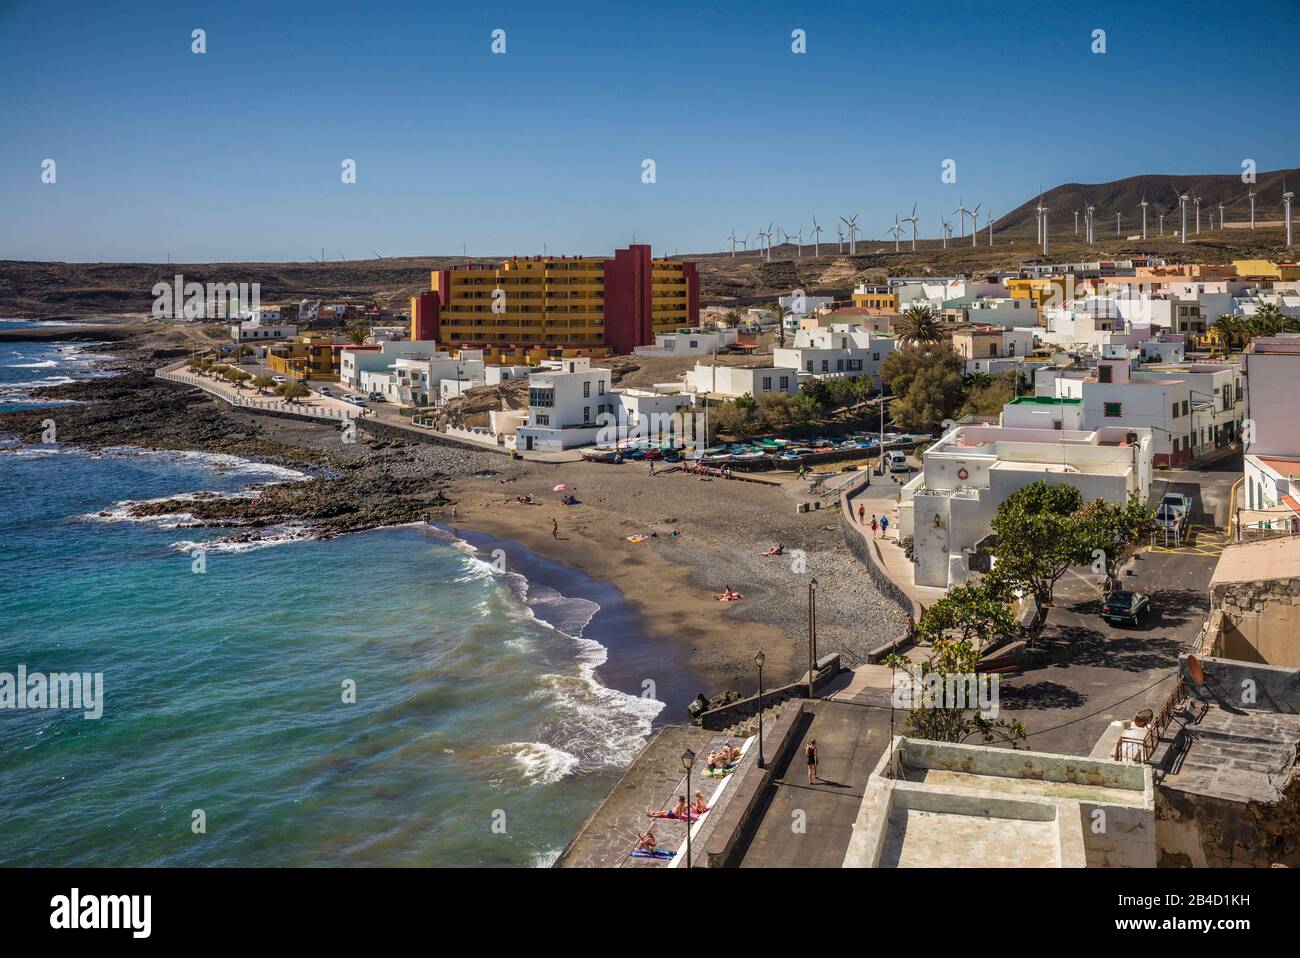 Spain, Canary Islands, Tenerife Island, Poris de Abona, elevated beach town view Stock Photo